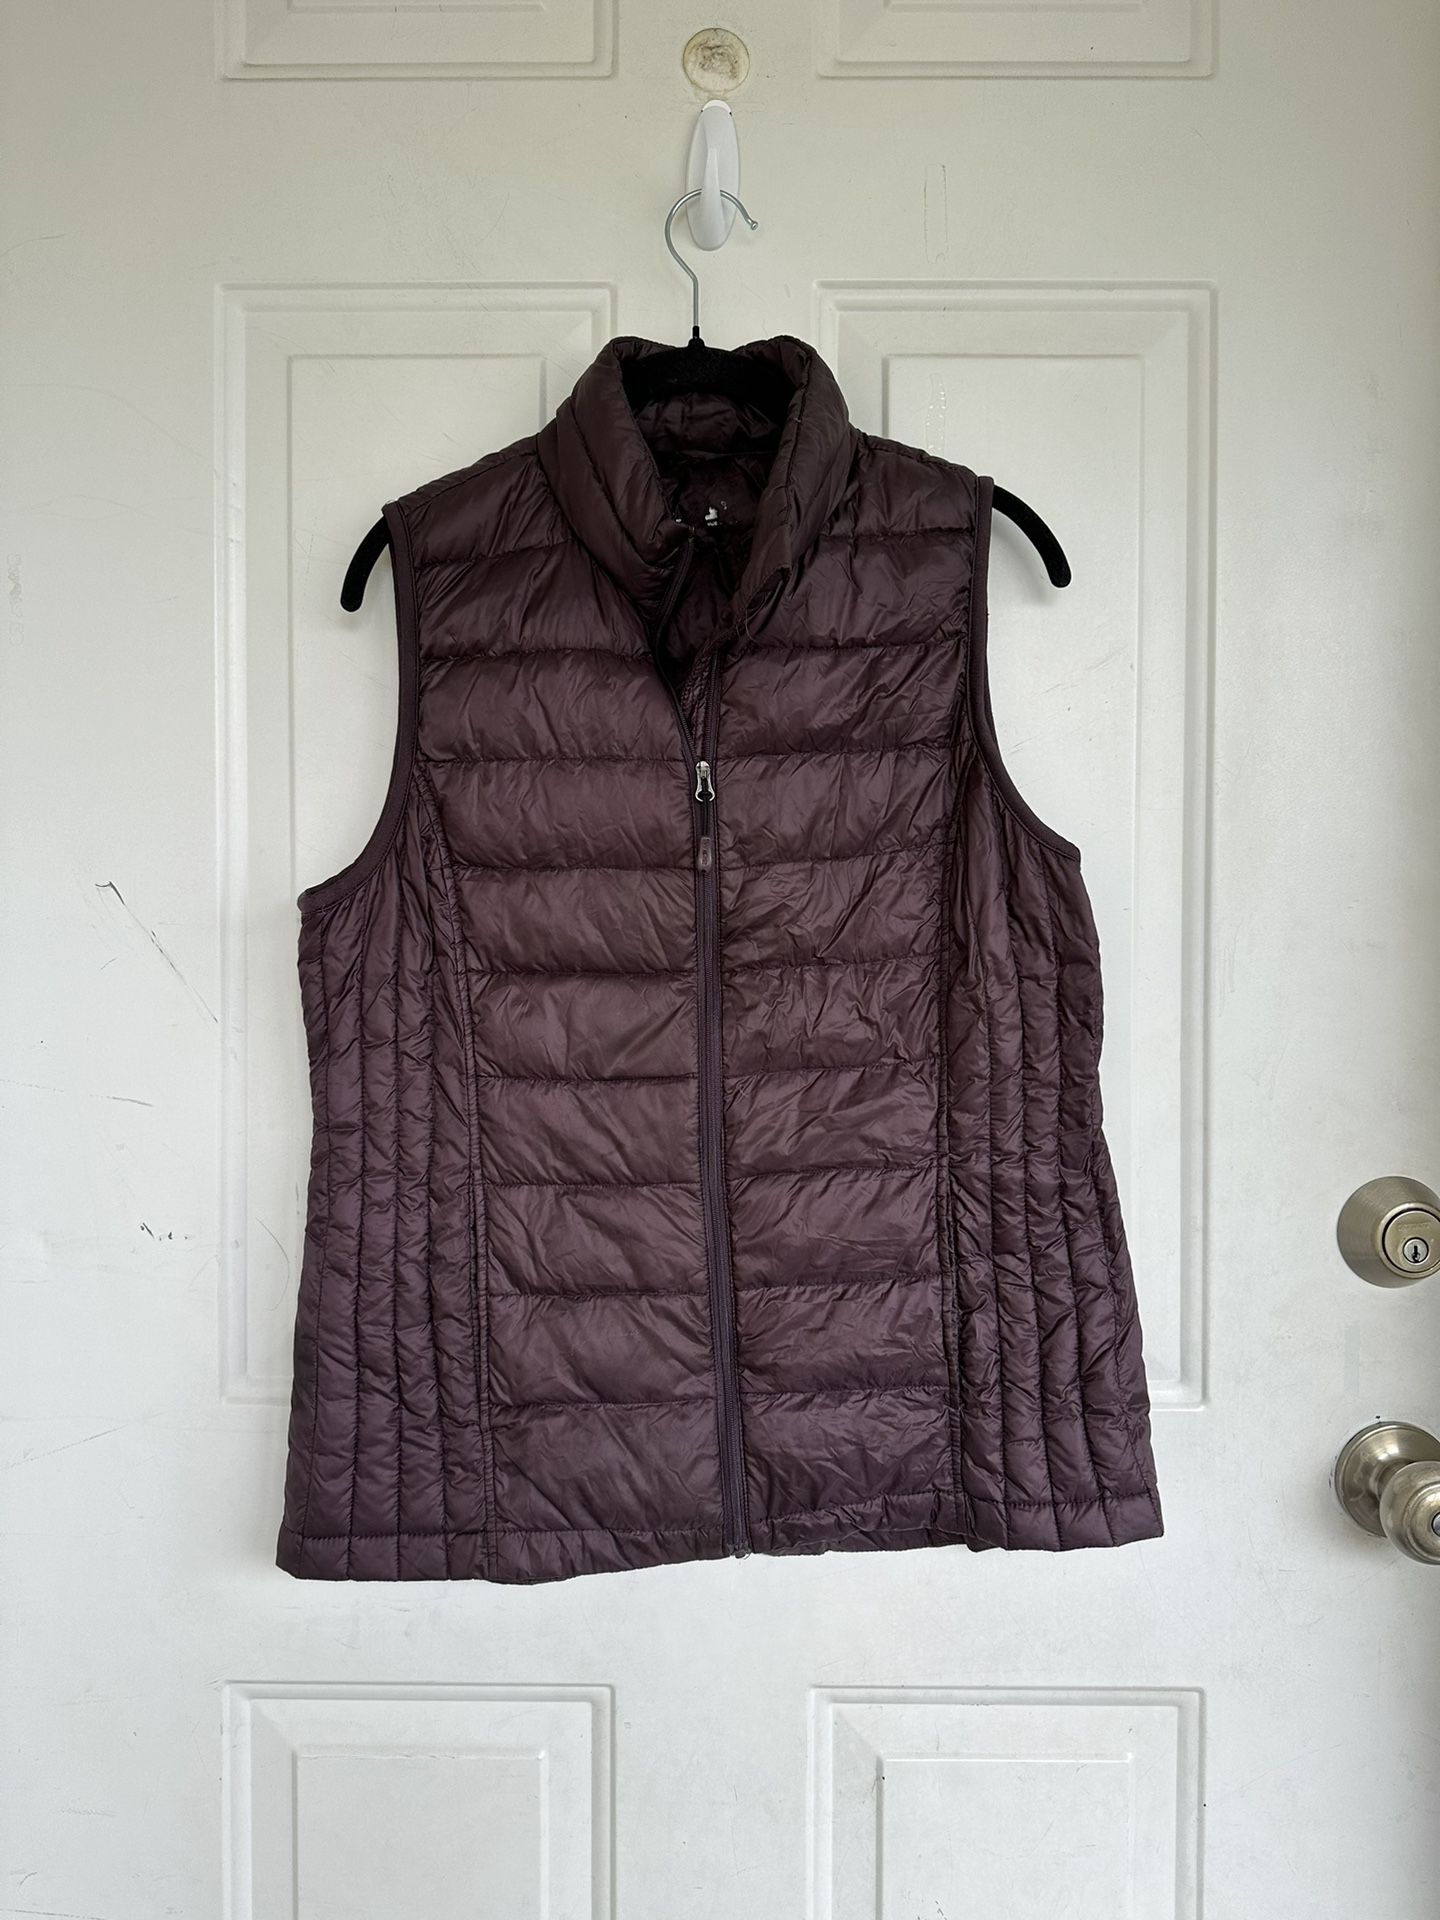 32 Degrees Puffer Vest Weatherproof Down Purple Vest size M